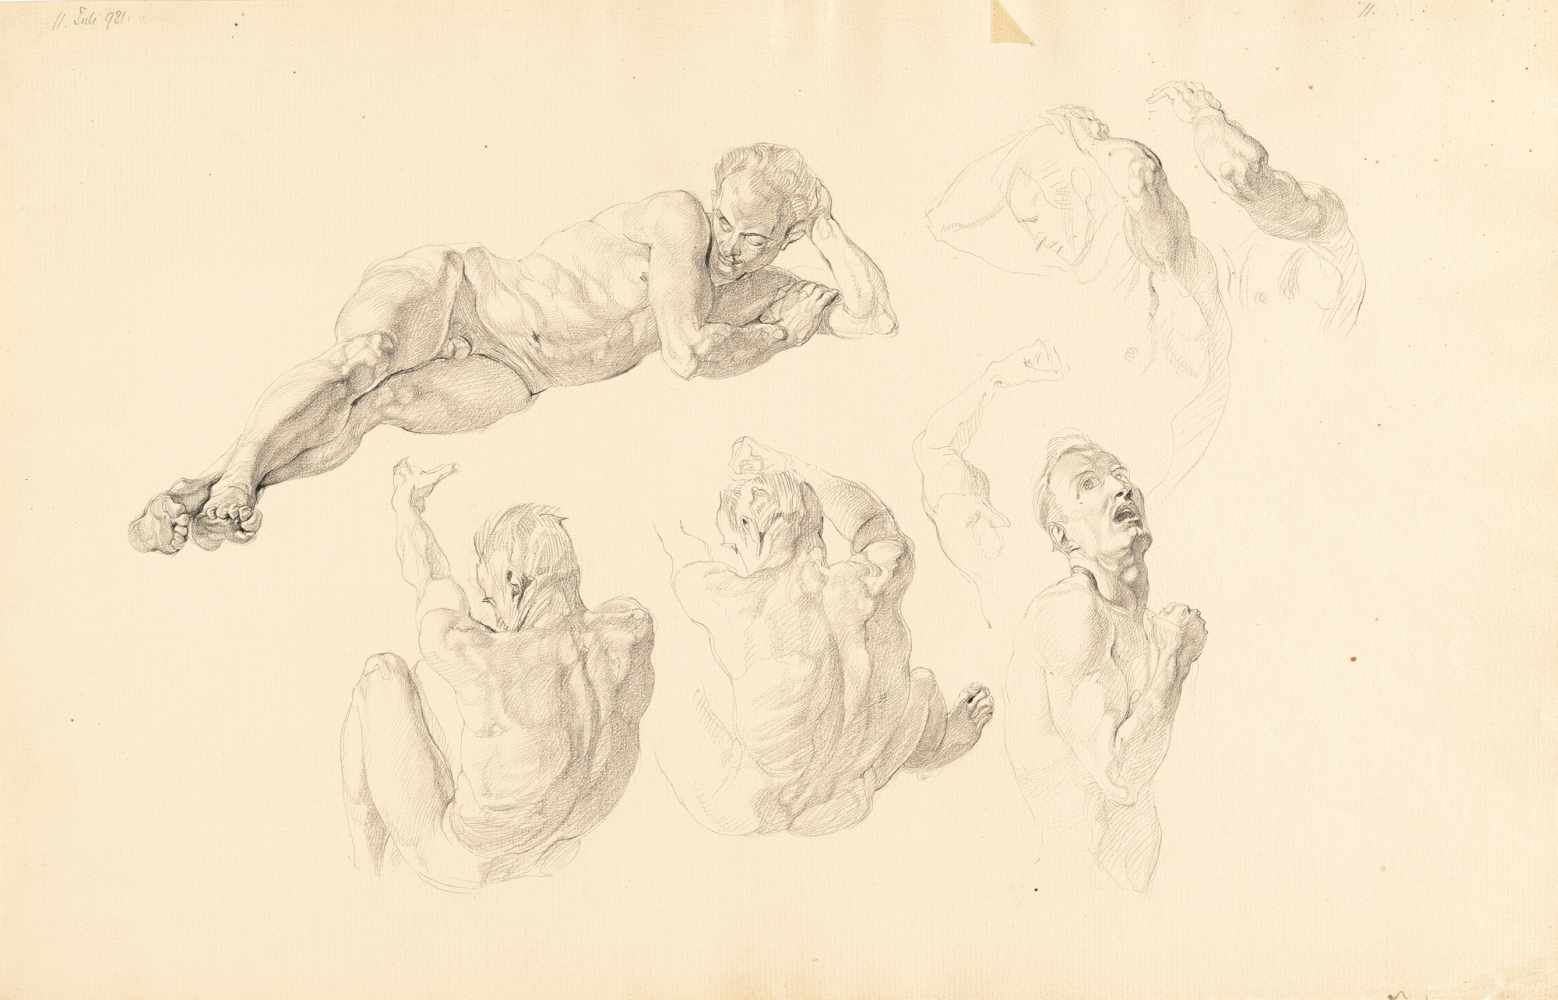 Rudolf Jettmar1869 Zawodzie bei Krakau - Wien 1939The day dreamer (studies of male nudes)Pencil on